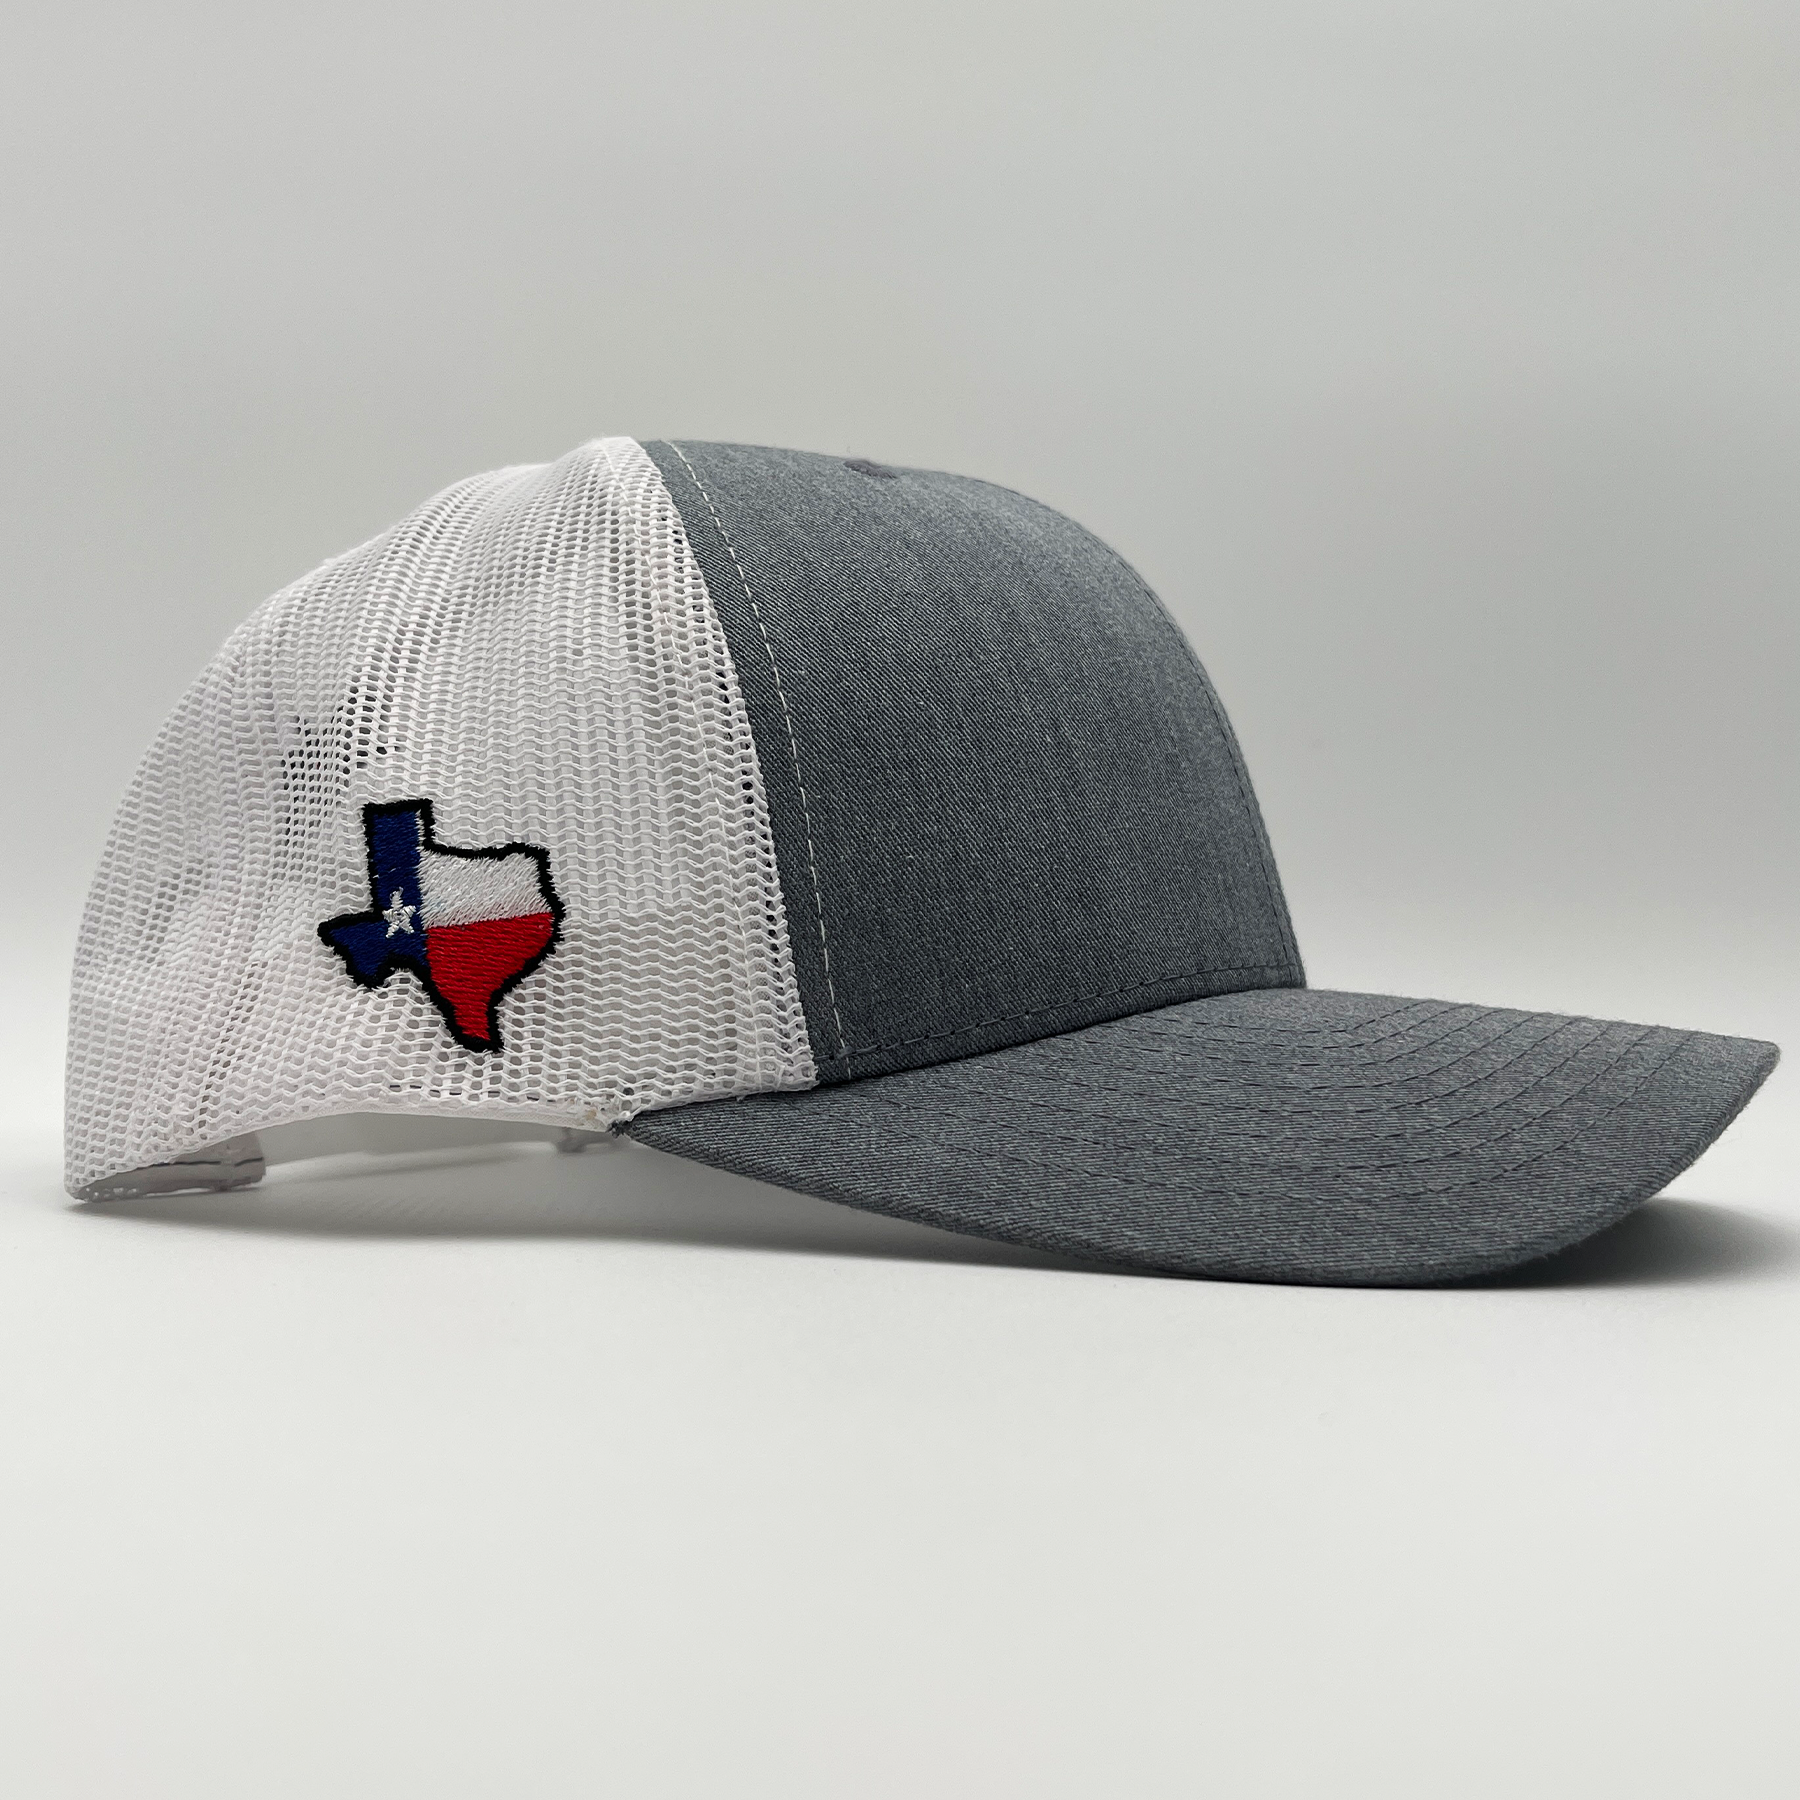 Bandit Cheap Custom Hat Affordable Yupoong Mens Adjustable Trucker Hat Texas Hats